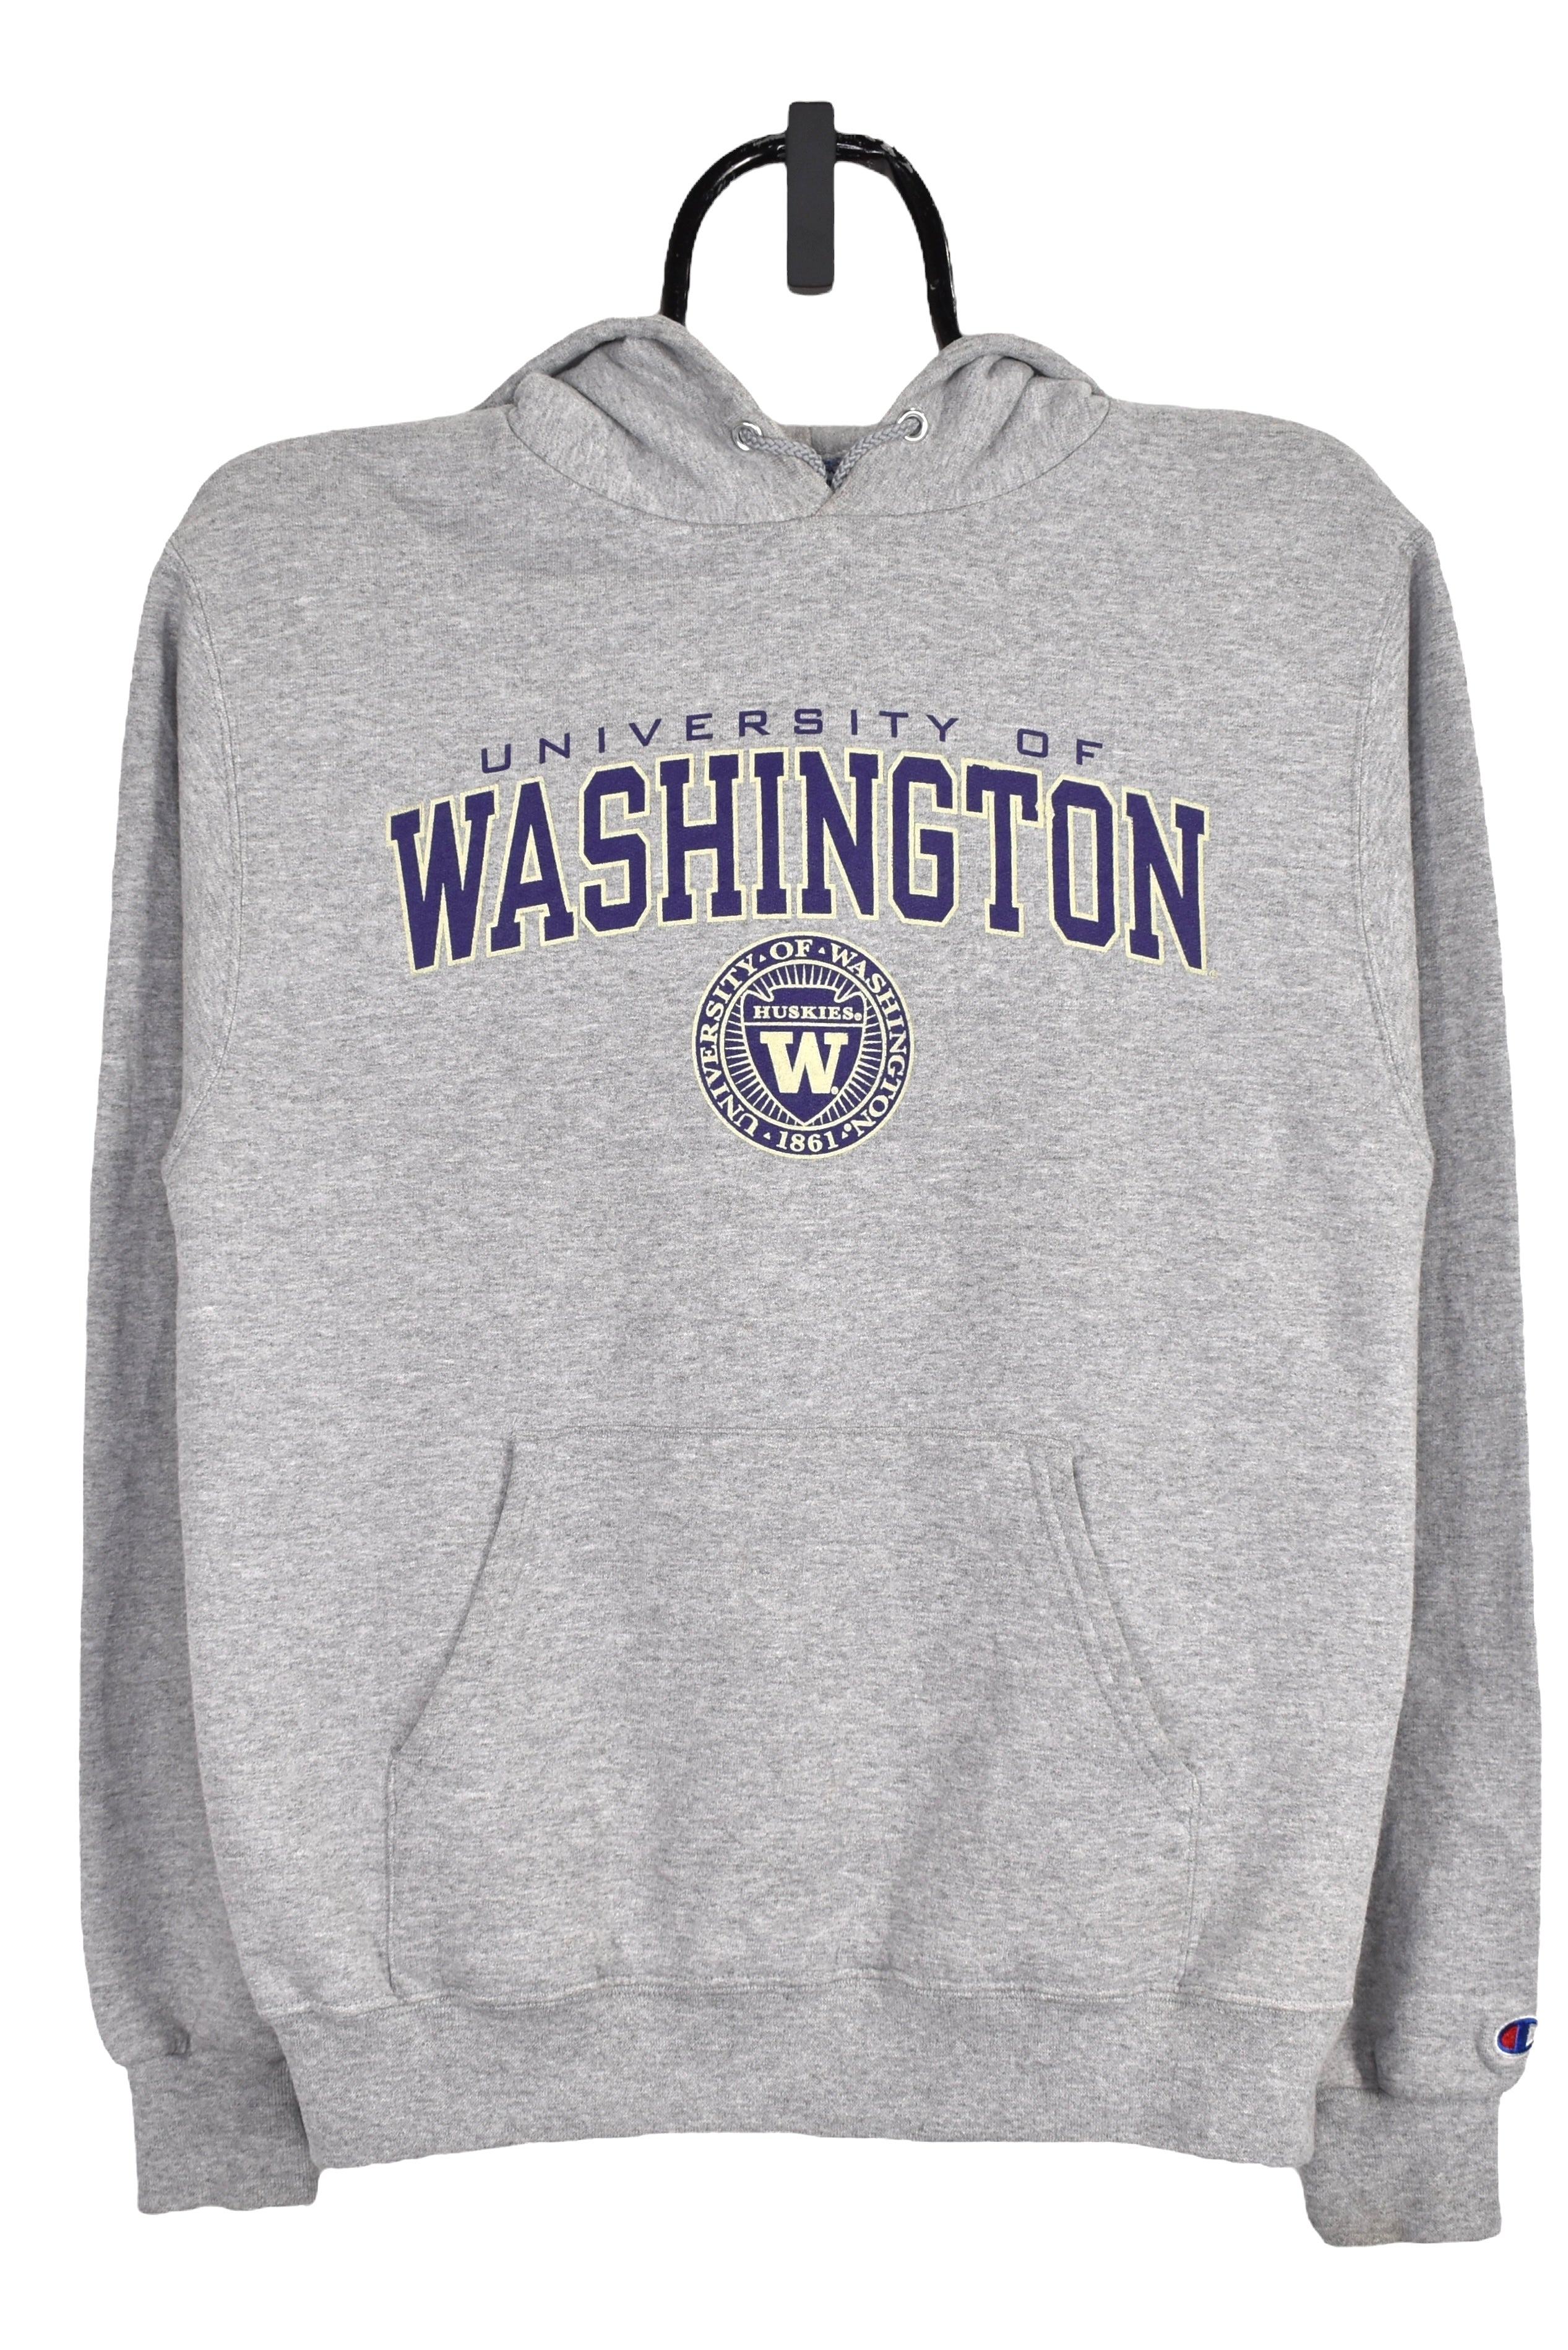 Vintage University of Washington hoodie (S), grey graphic sweatshirt